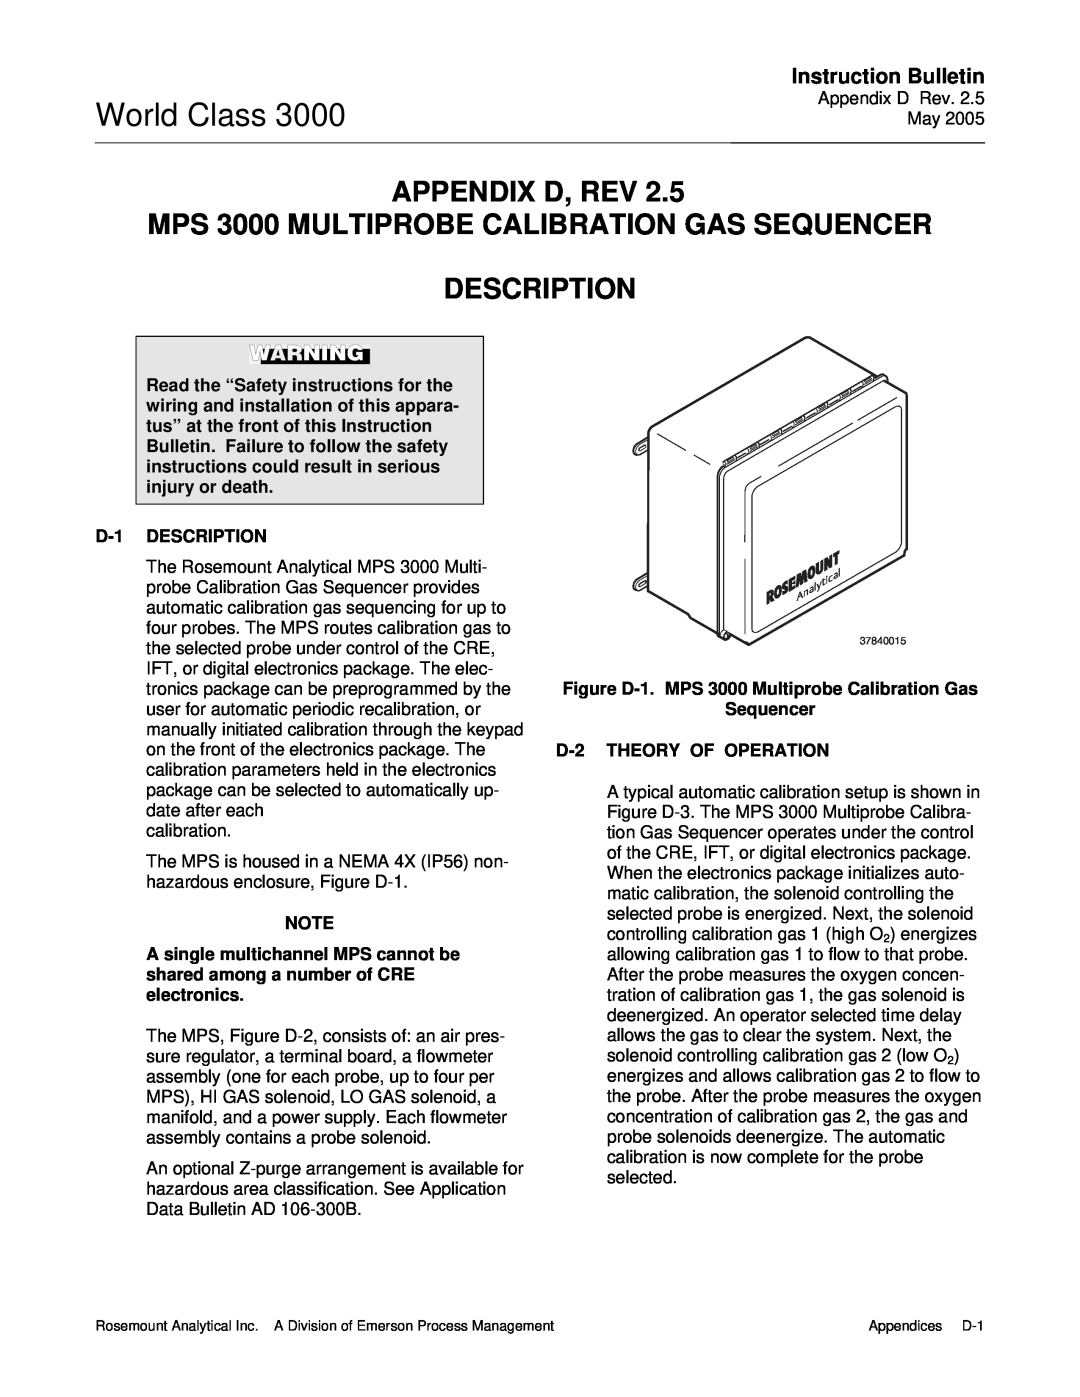 Emerson Appendix D, Rev, MPS 3000 MULTIPROBE CALIBRATION GAS SEQUENCER, World Class, Description, Instruction Bulletin 